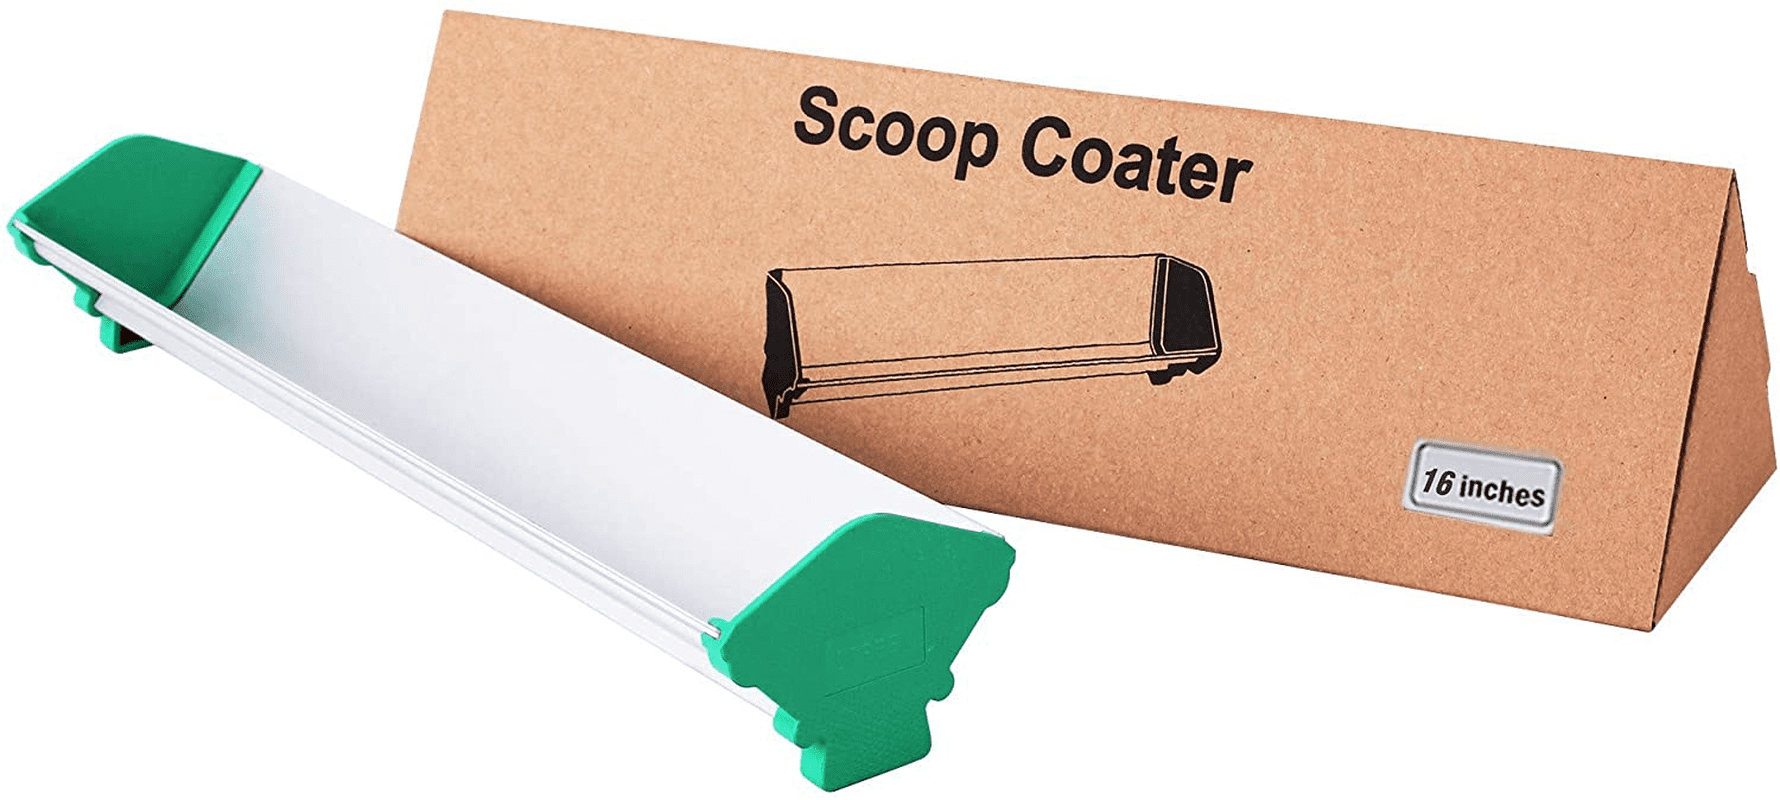 Hot 6 Inch Emulsion Scoop Coater Silk Screen Printing Aluminum Coating Tool 